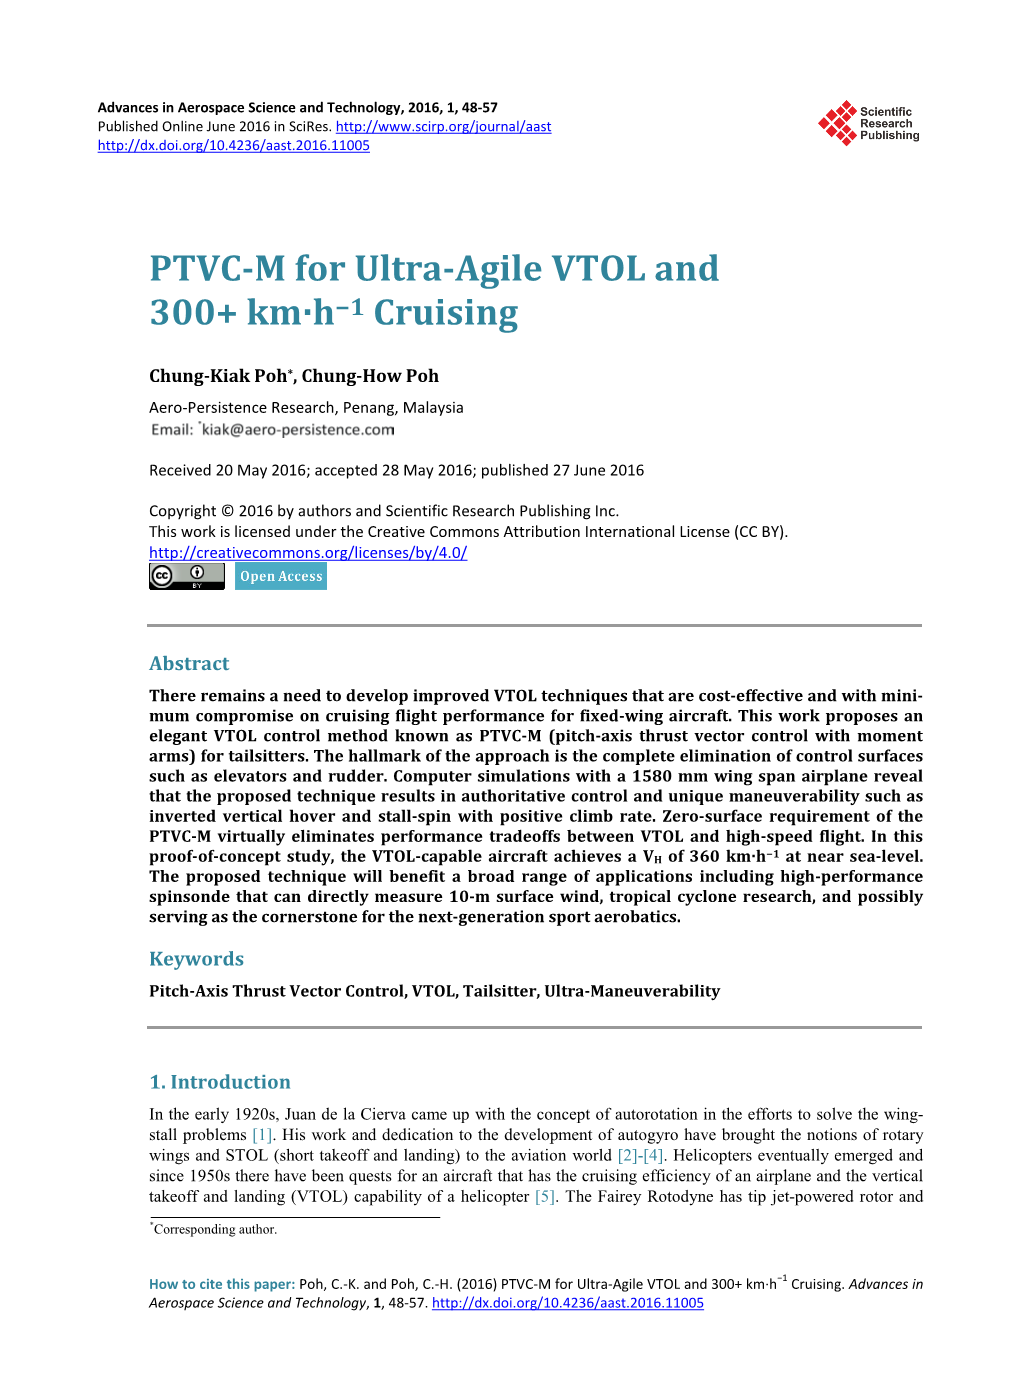 PTVC-M for Ultra-Agile VTOL and 300+ Km·H−1 Cruising